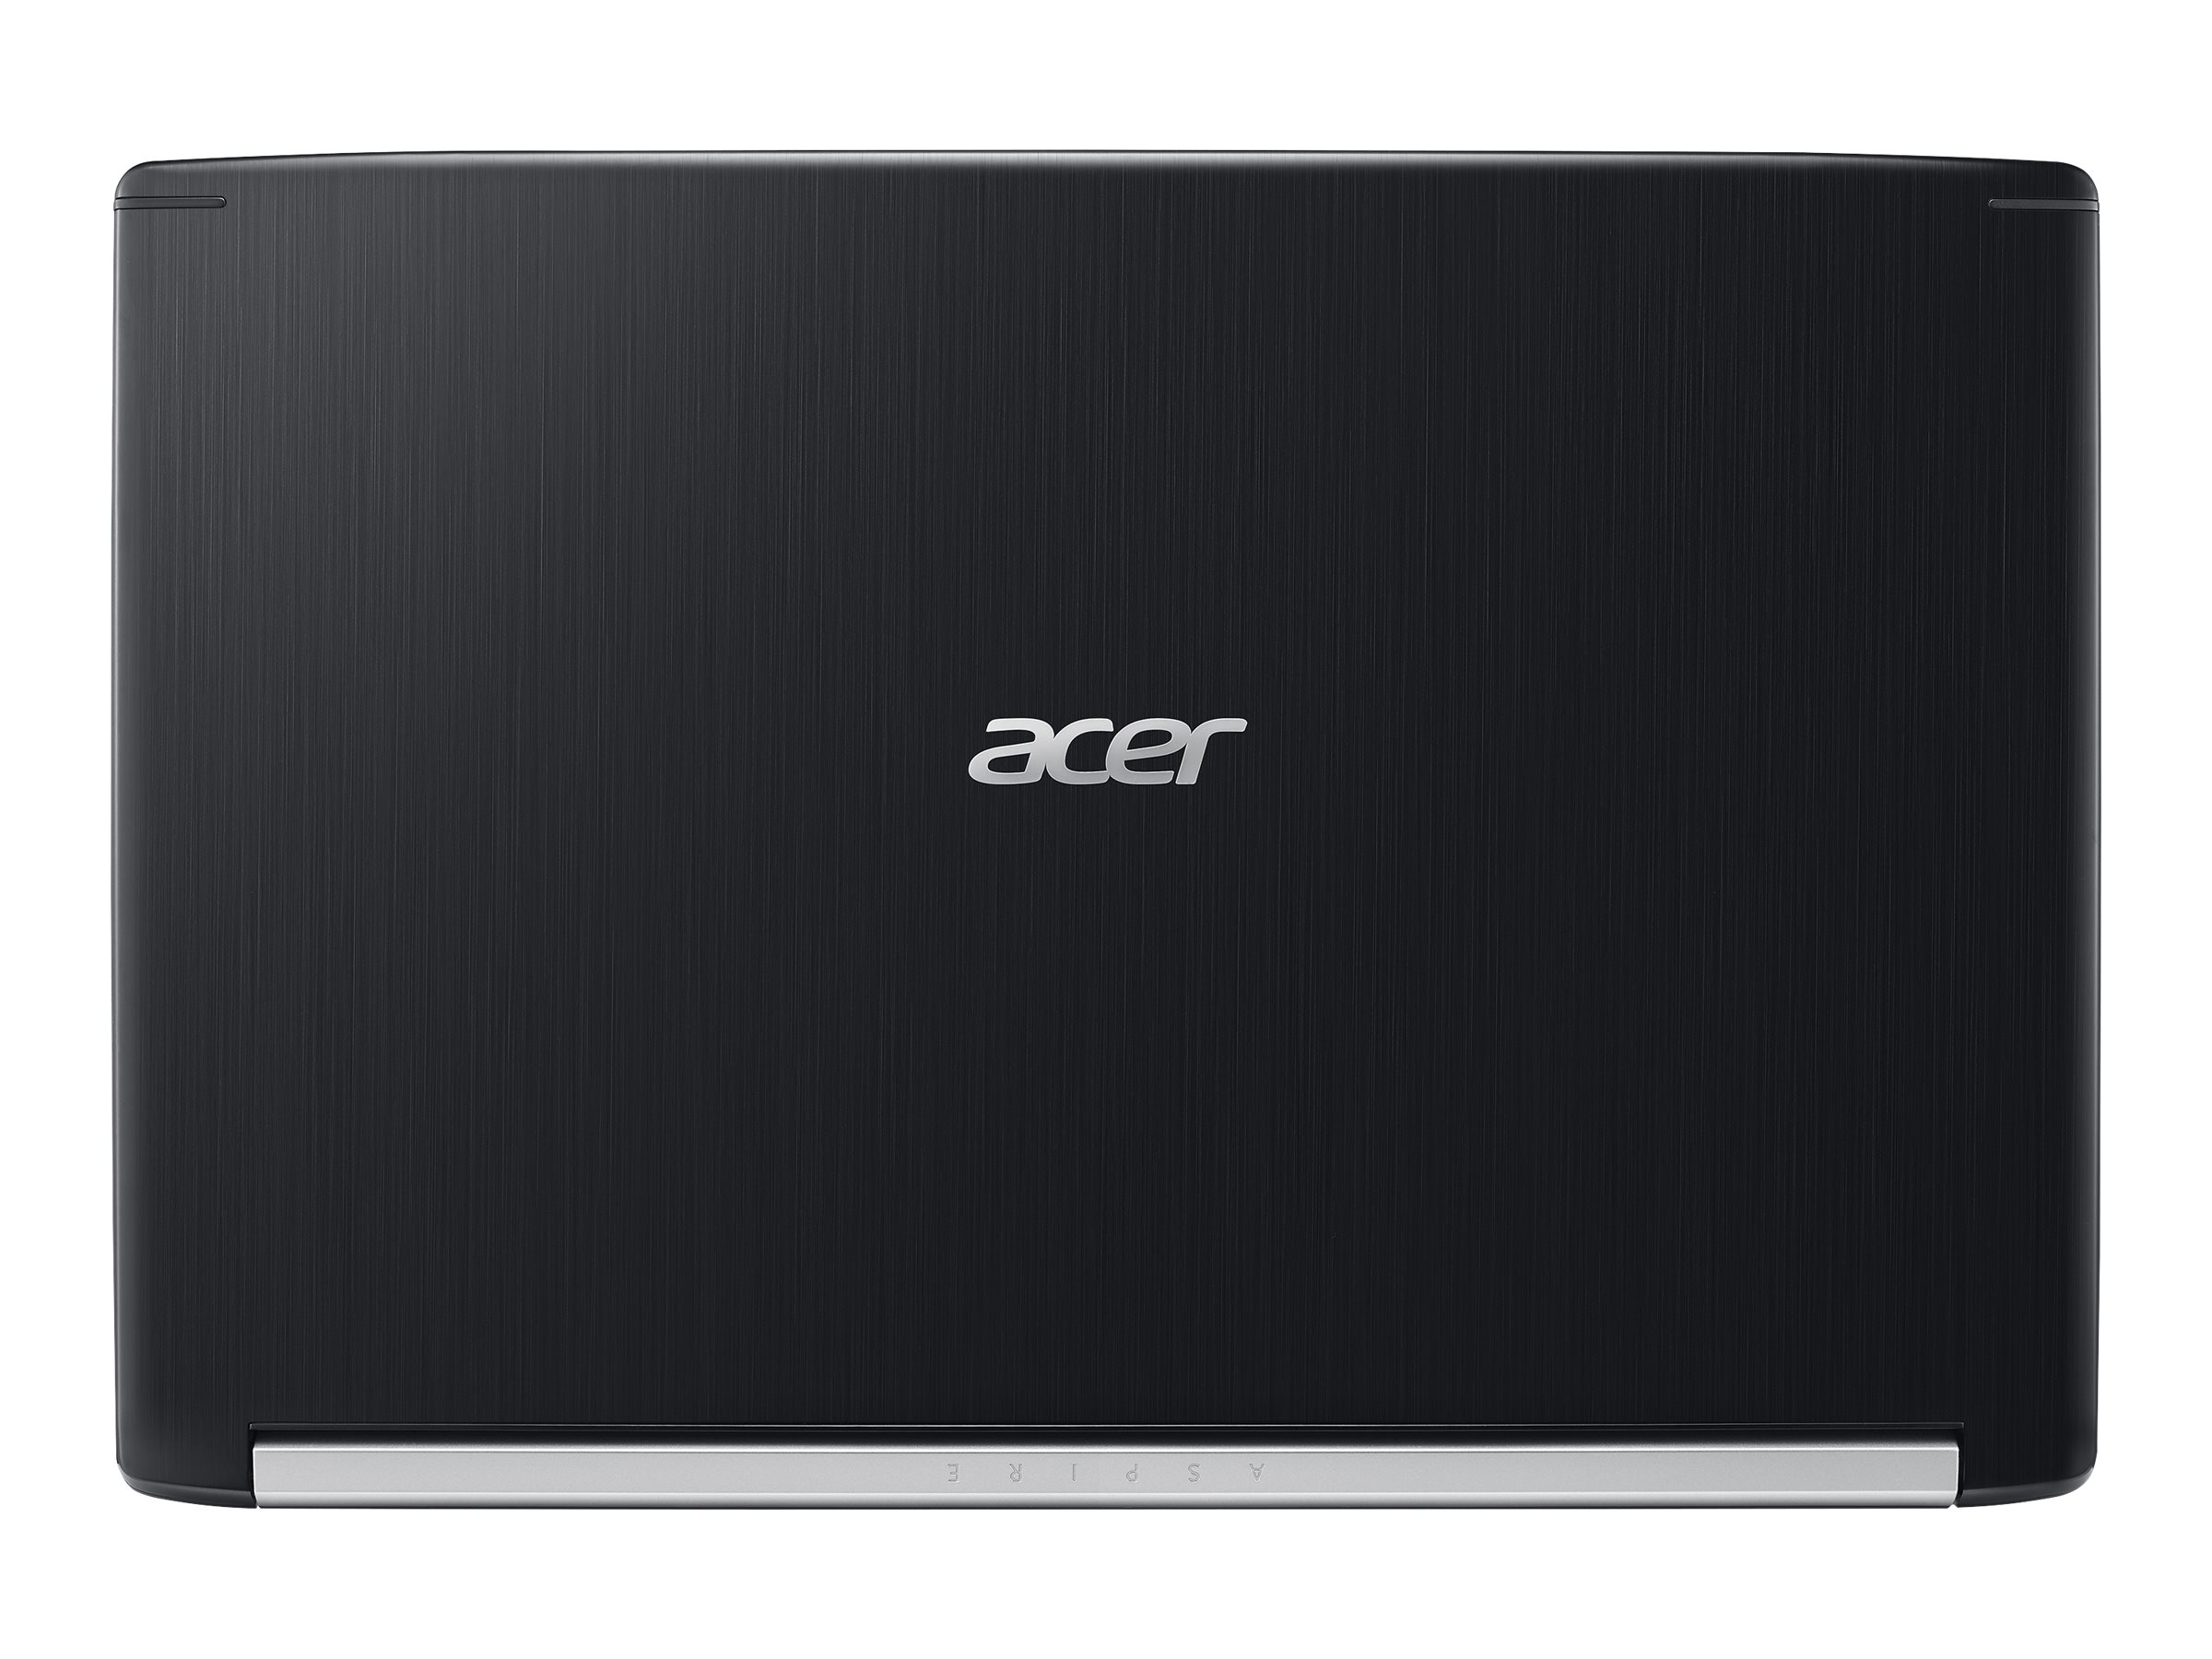 Acer Aspire 7 A715-72G-79BH, 15.6" Full HD, 8th Gen Intel Core i7-8750H, NVIDIA GeForce GTX 1050, 8GB DDR4, 1TB HDD, HDMI 2.0, Fingerprint Reader, Windows Hello - image 4 of 8